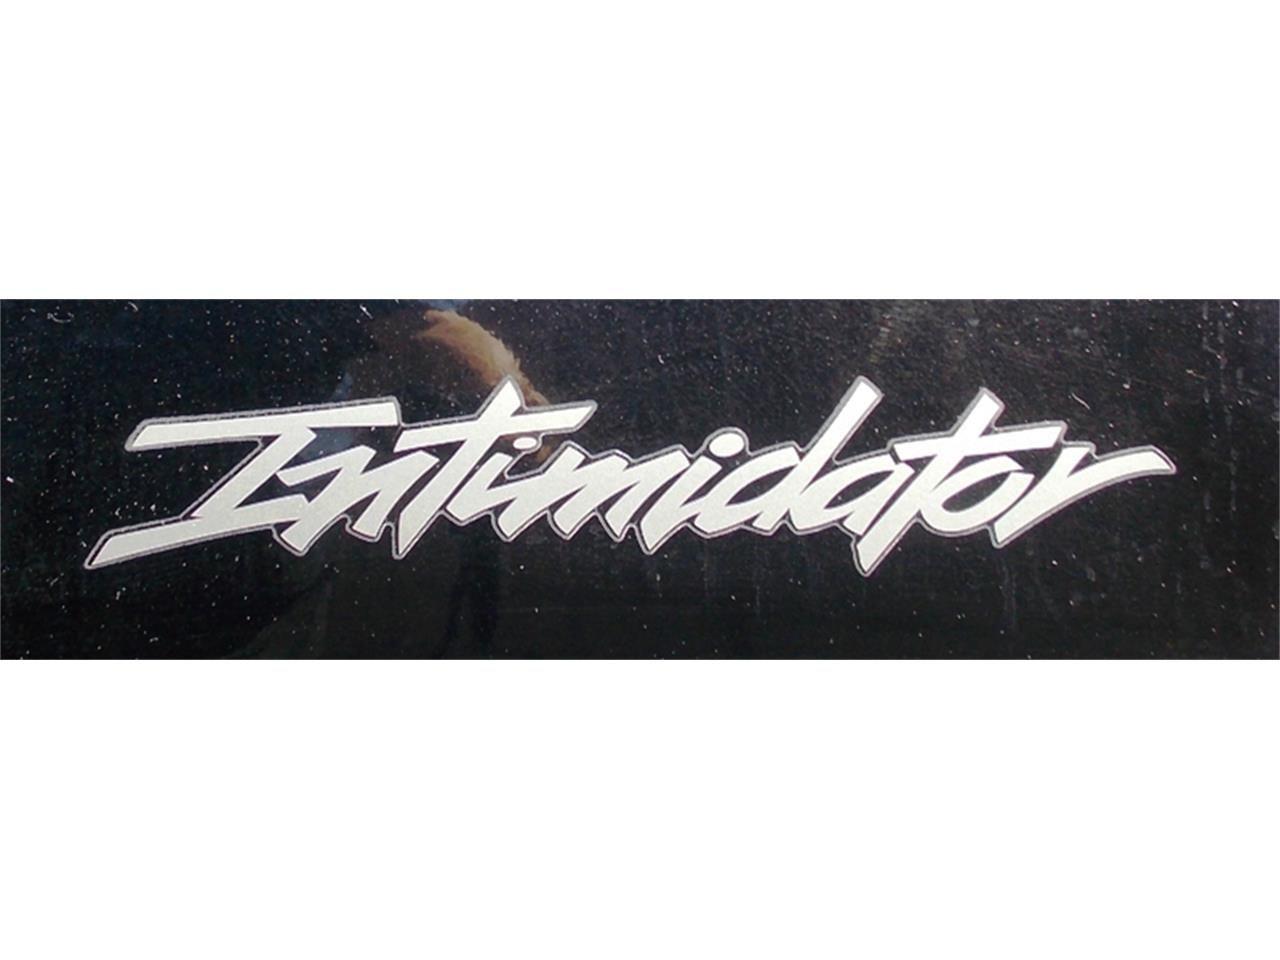 Intimidator Logo - 2002 Chevrolet Monte Carlo SS Intimidator for Sale | ClassicCars.com ...